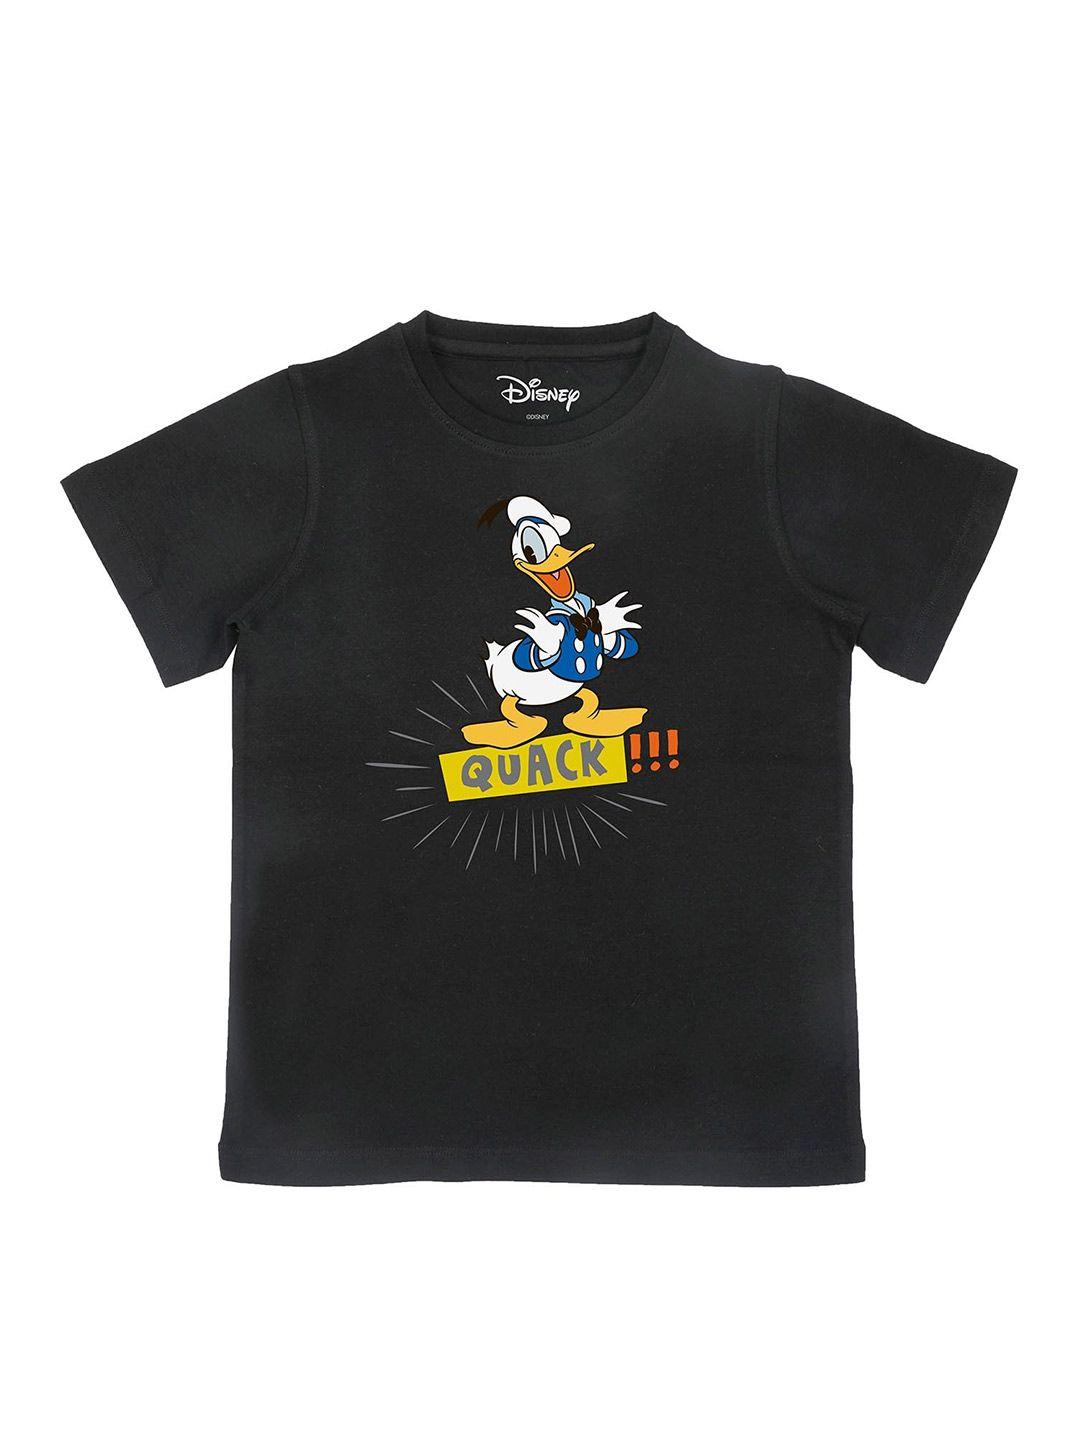 disney-by-wear-your-mind-boys-black-donald-duck-printed-applique-t-shirt